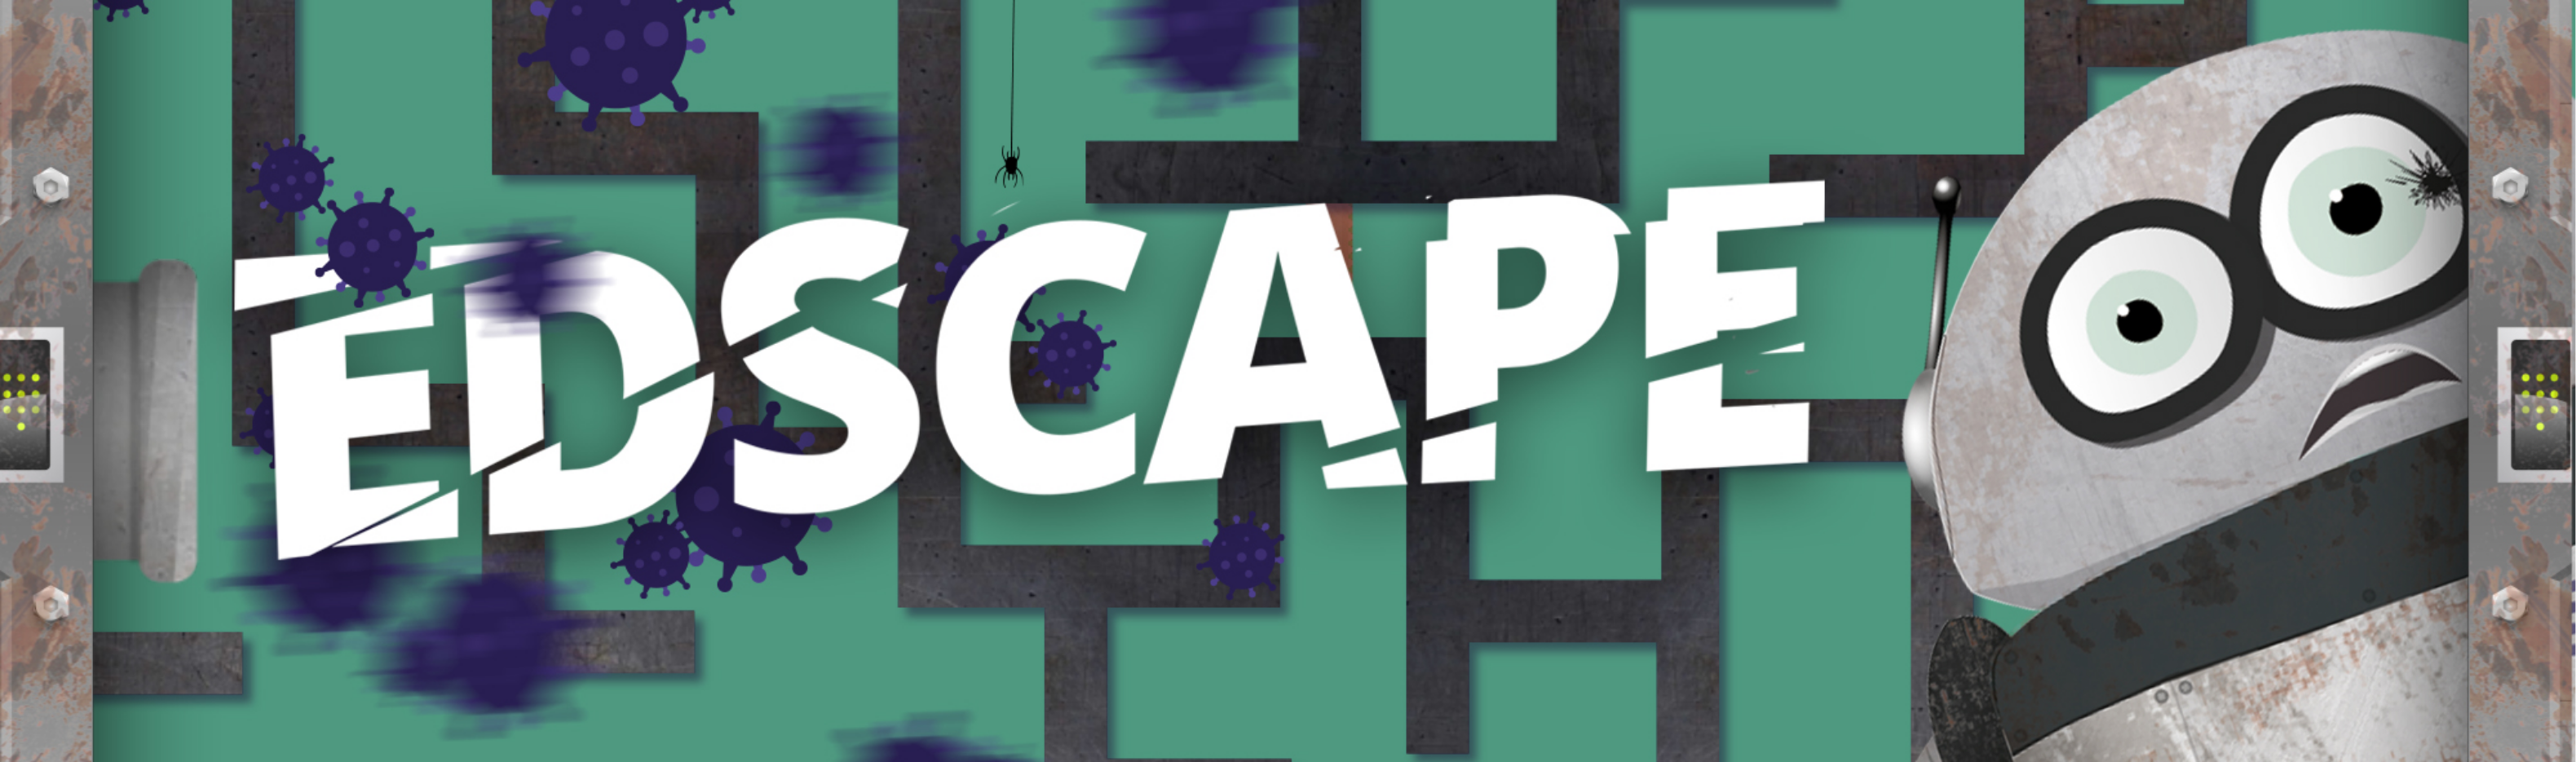 edscape logo